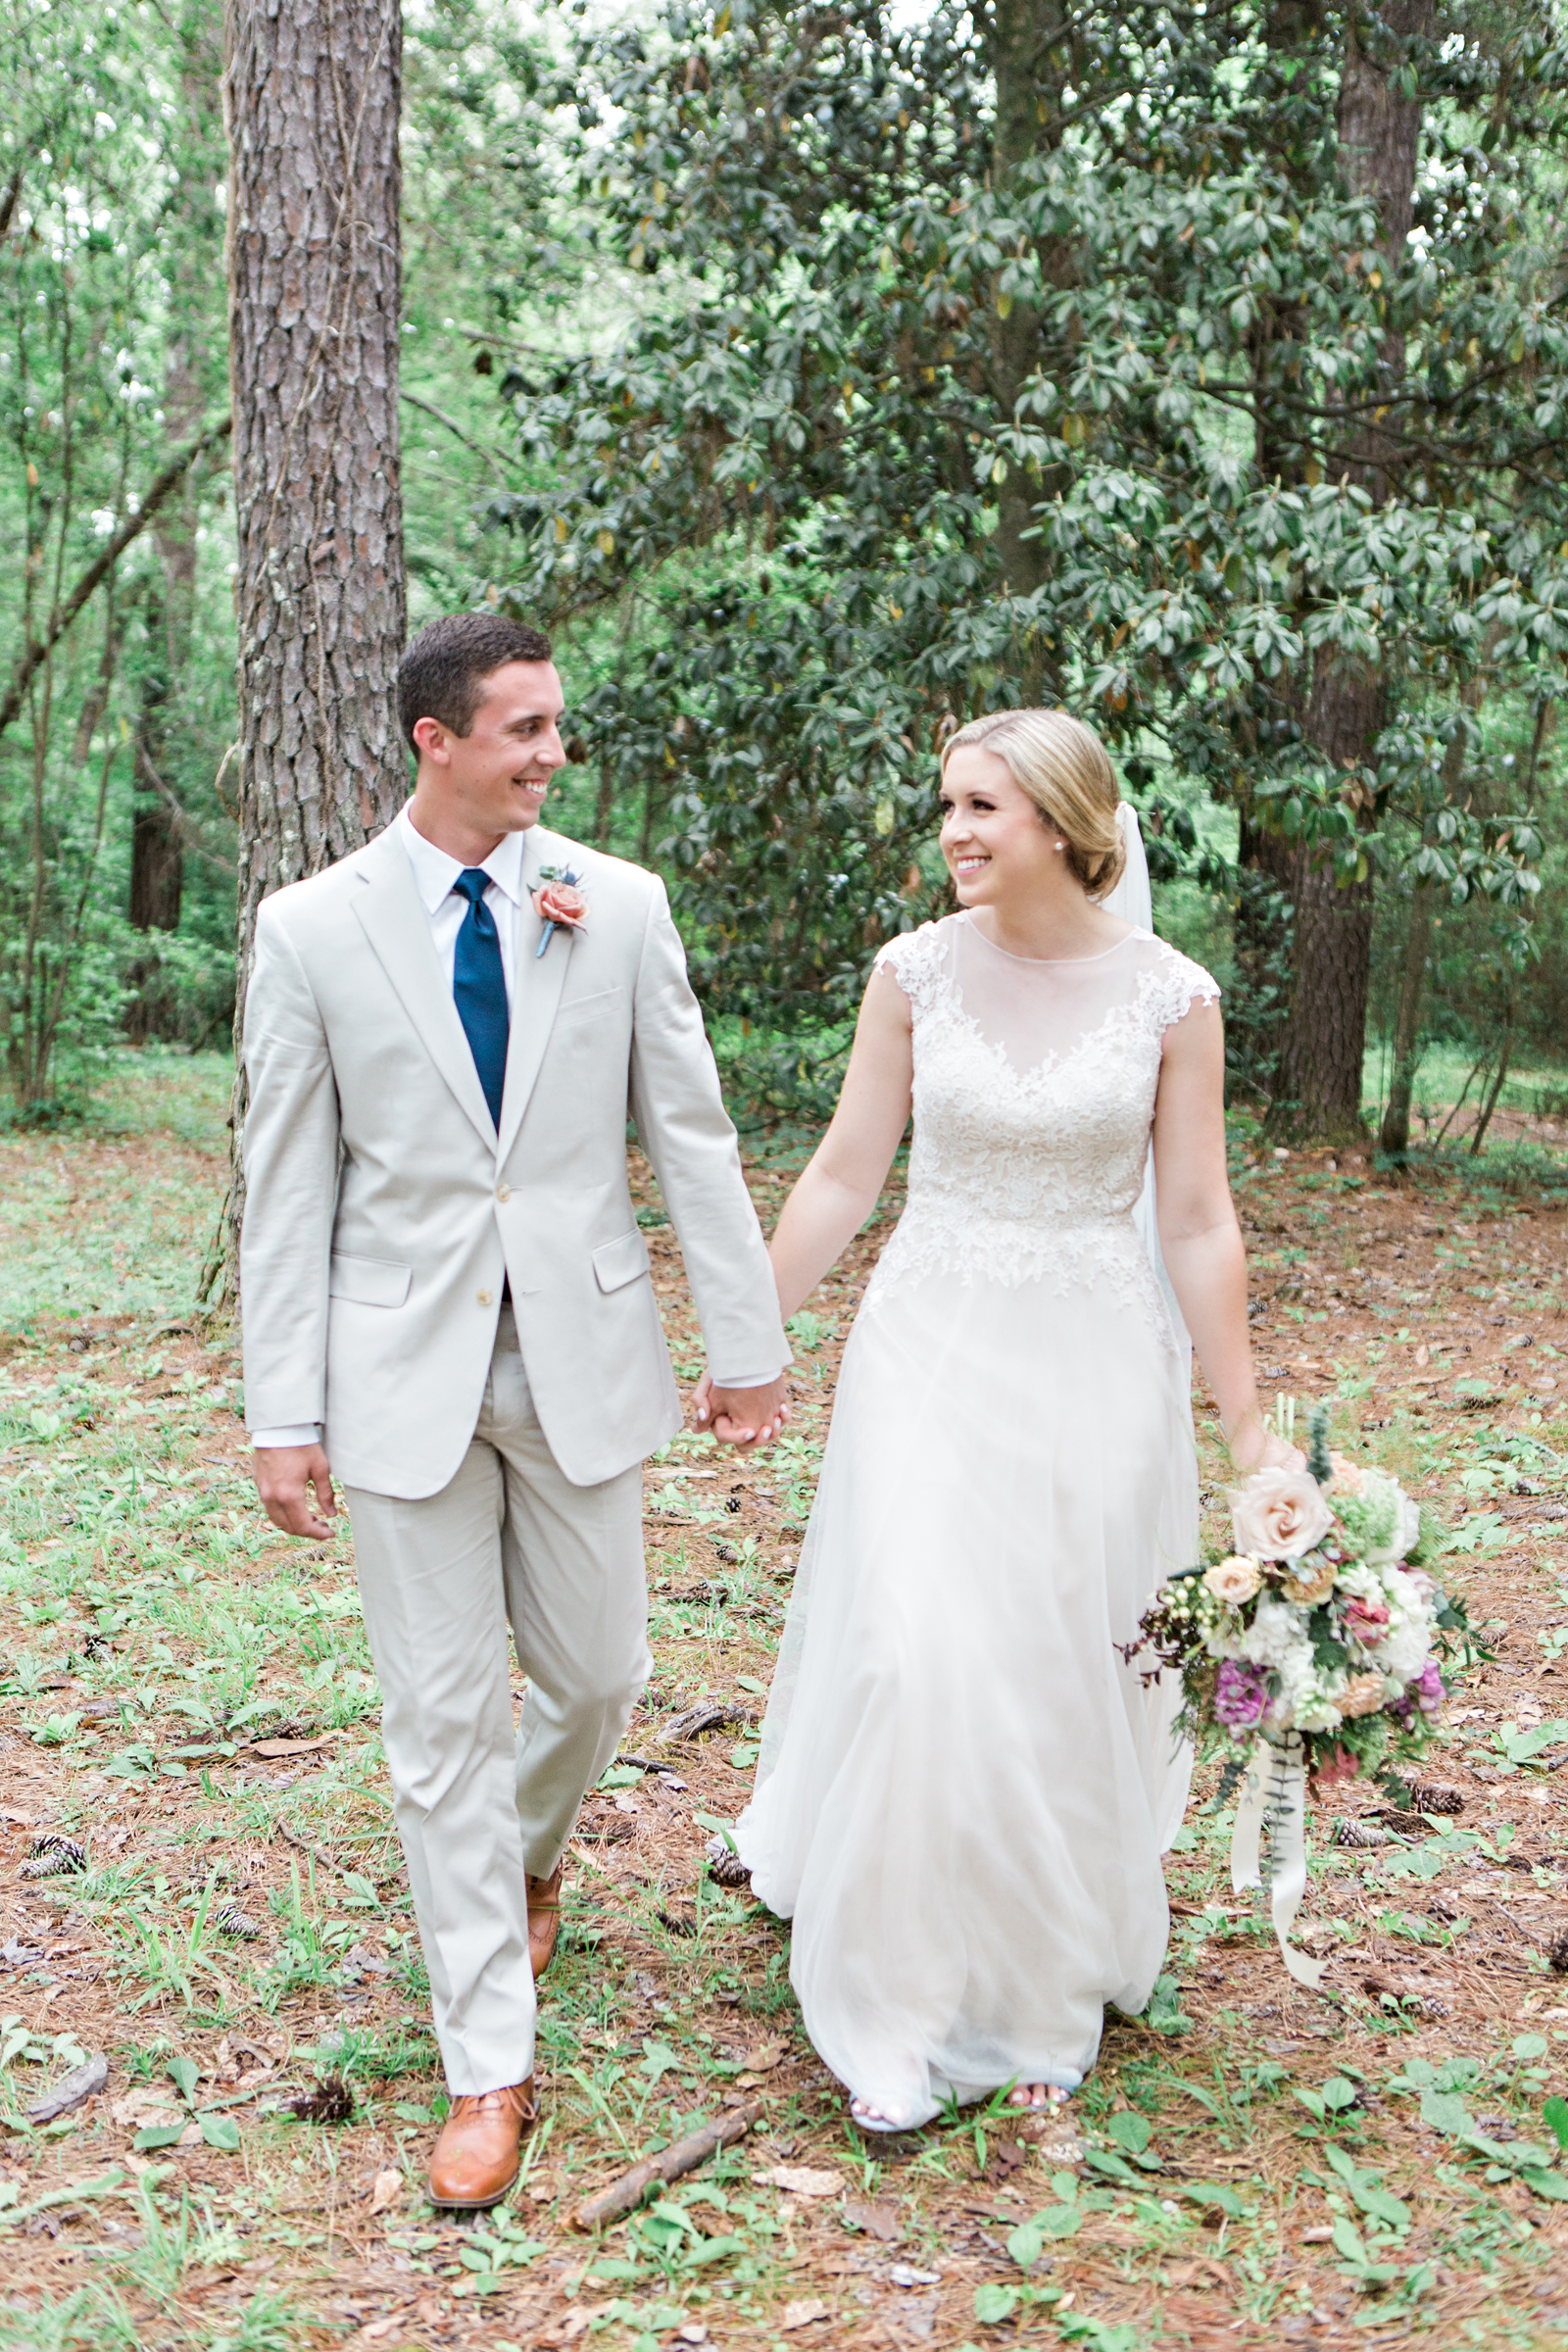 Matty-Drollette-Photography-Alabama-Weddings-Sara and Logan-123.jpg